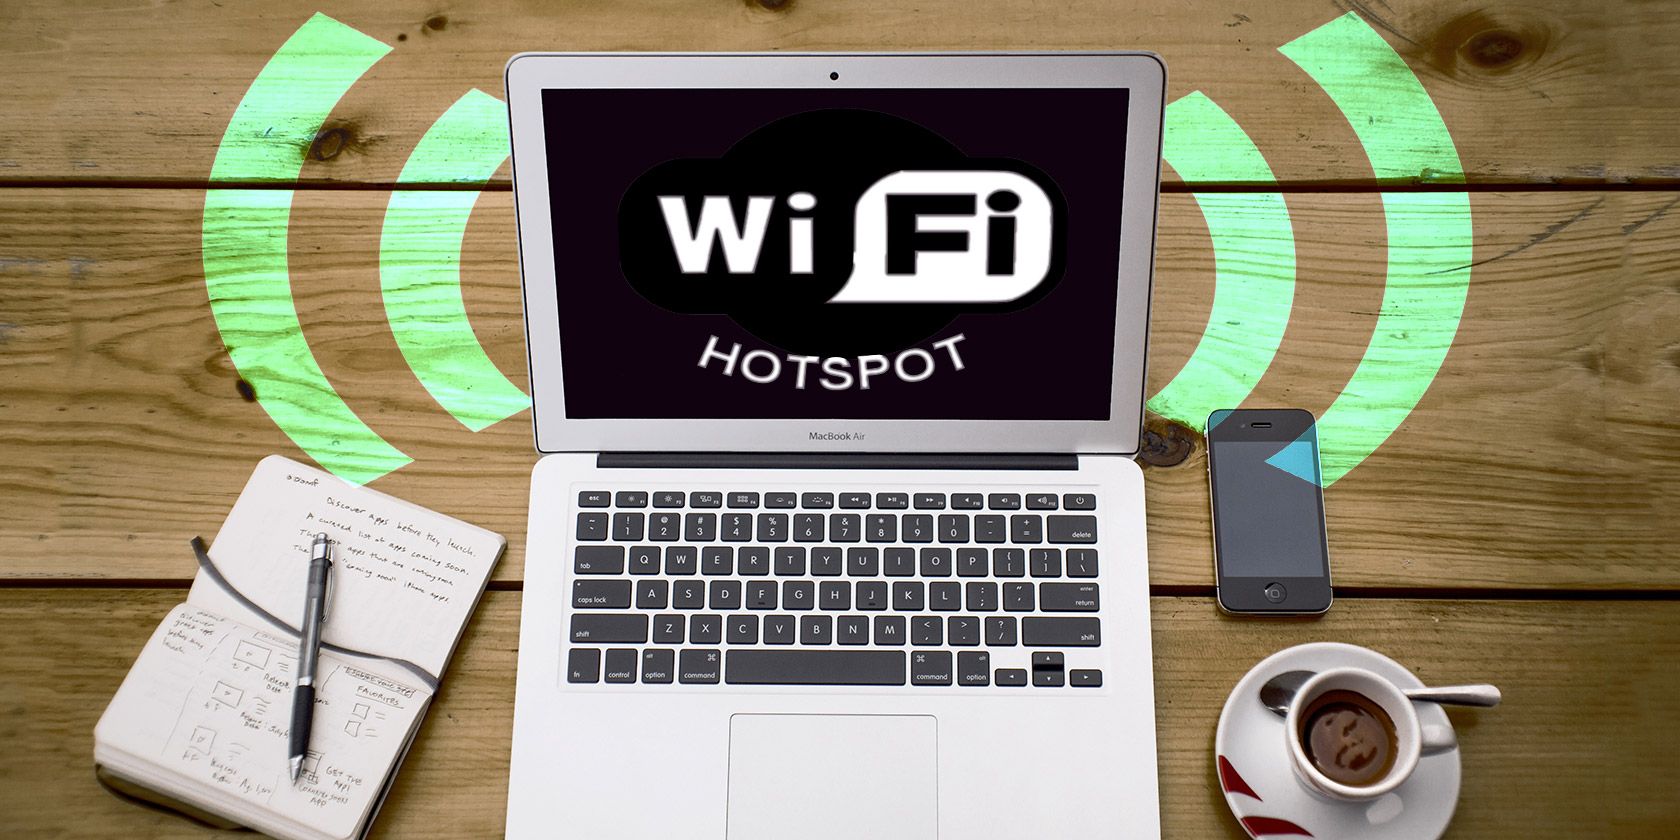 MacBook turned into a Wi-Fi hotspot